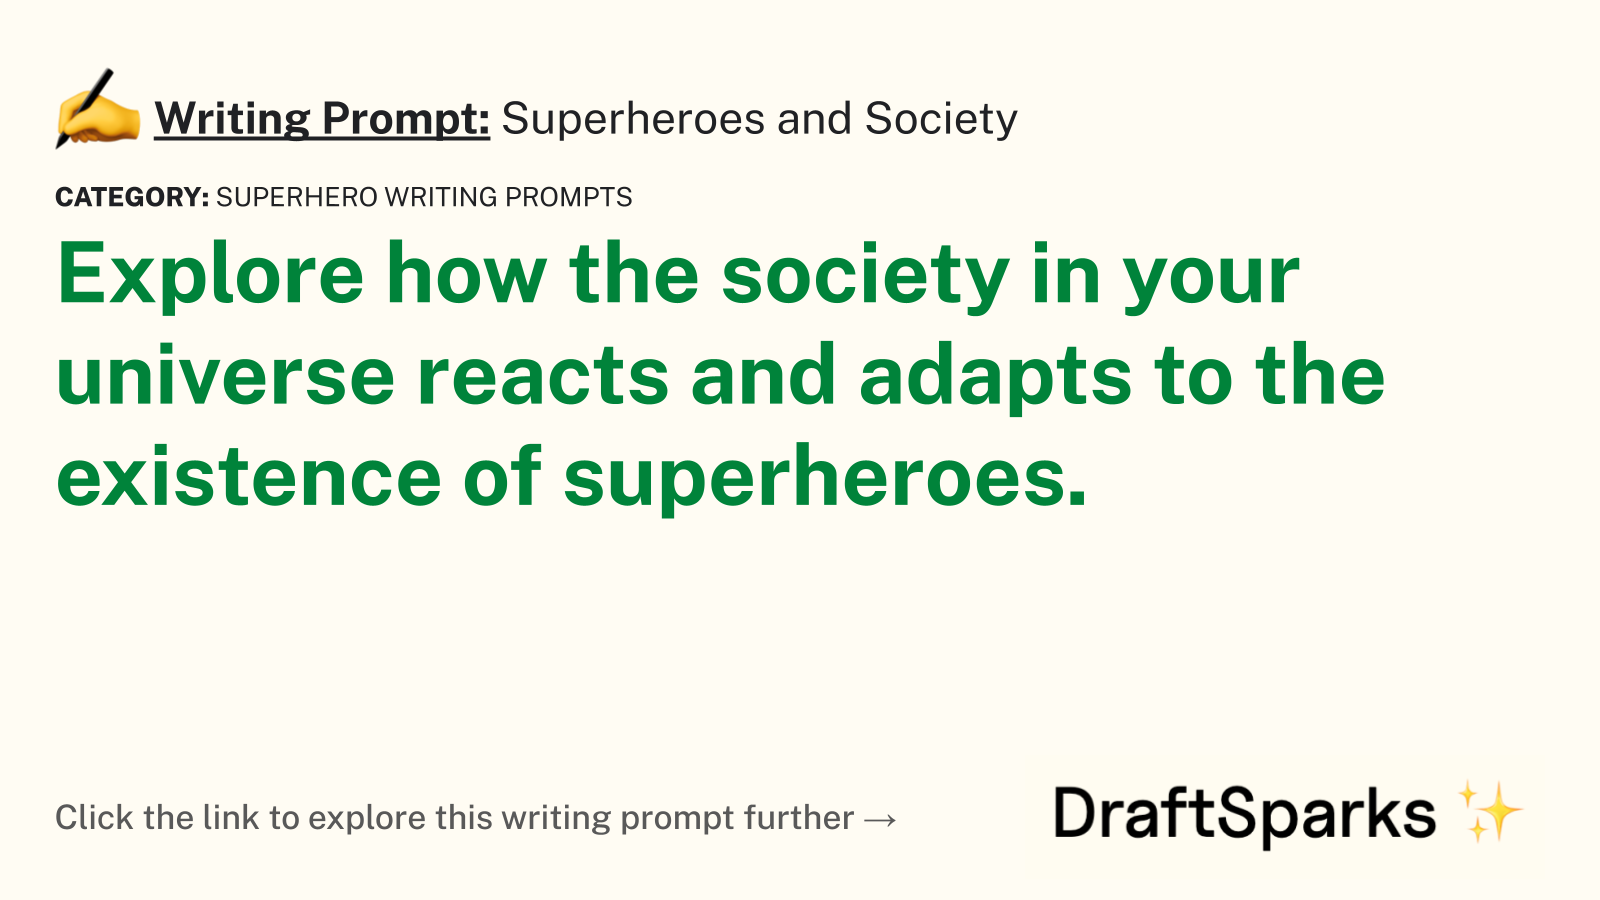 Superheroes and Society